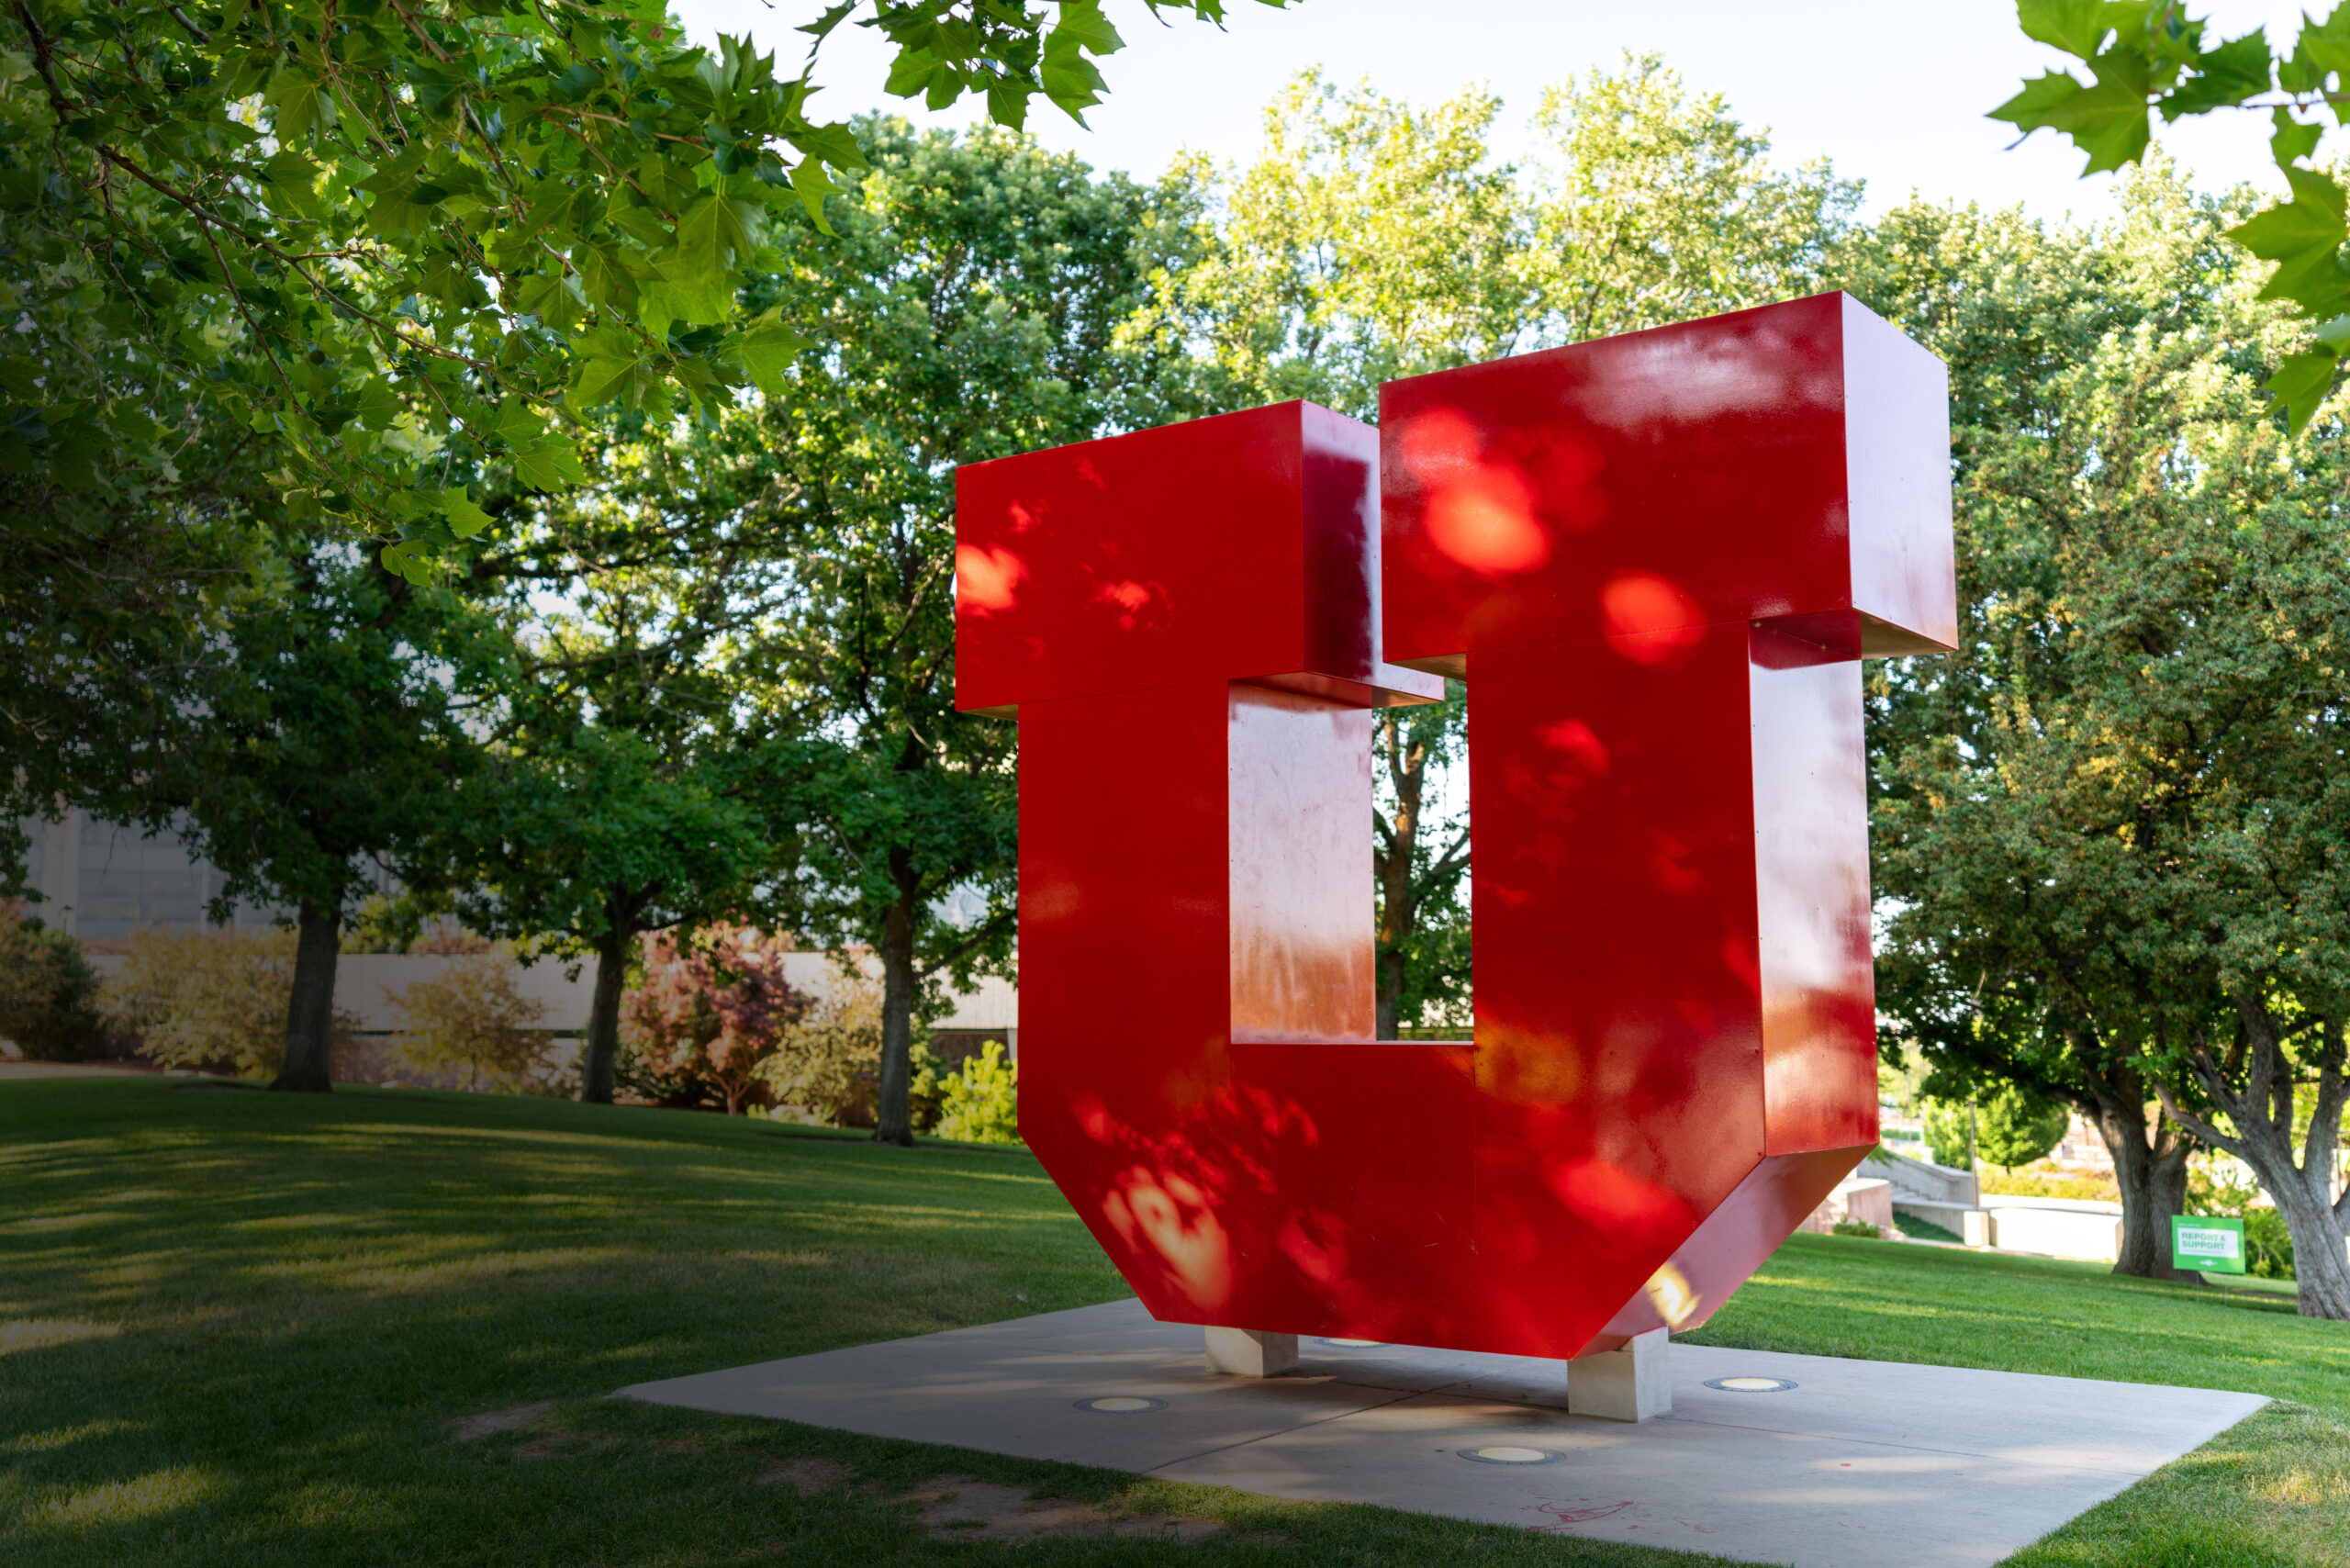 the Block U installation on the University of Utah campus